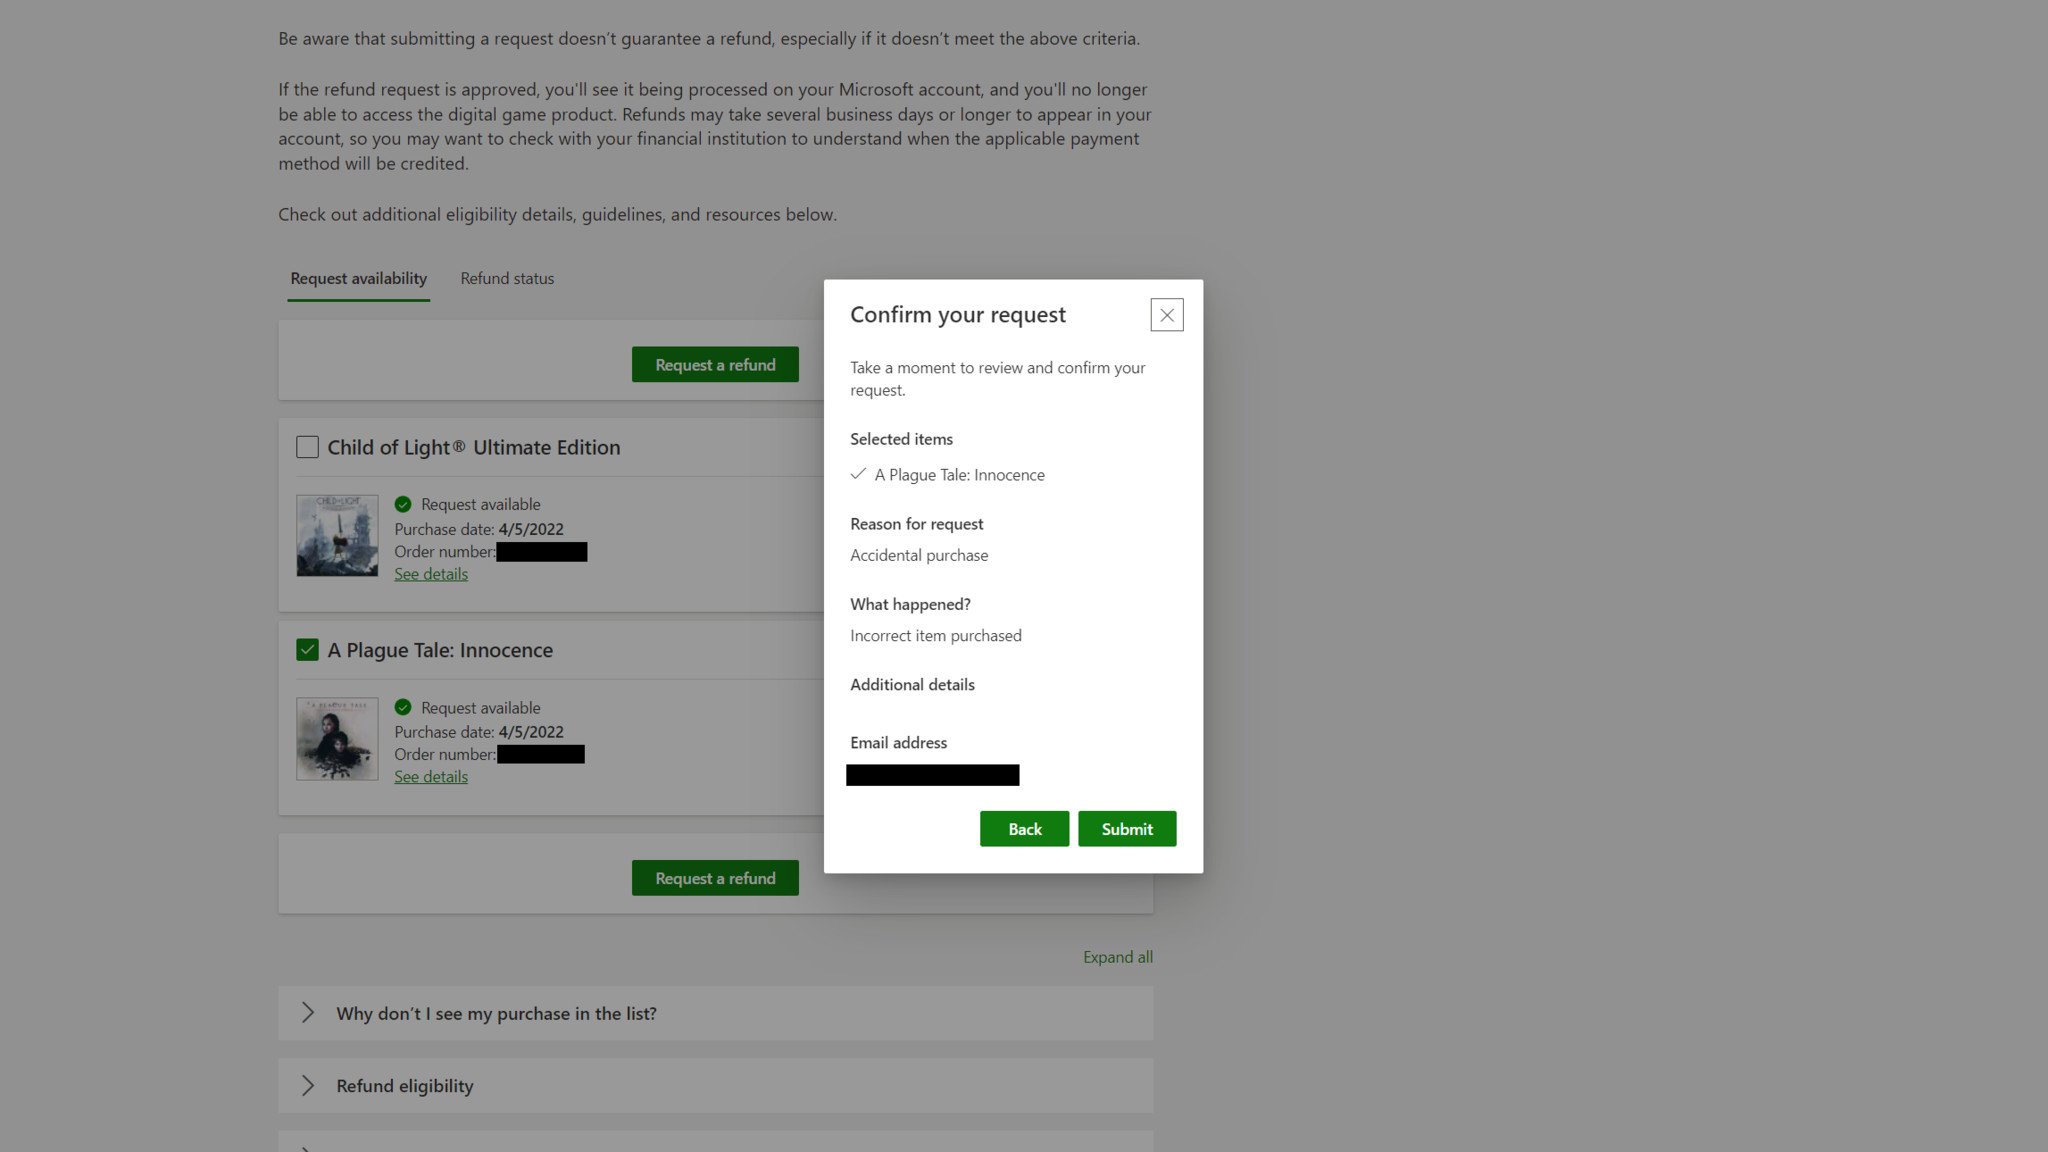 Xbox Games Refund Request Portal Image